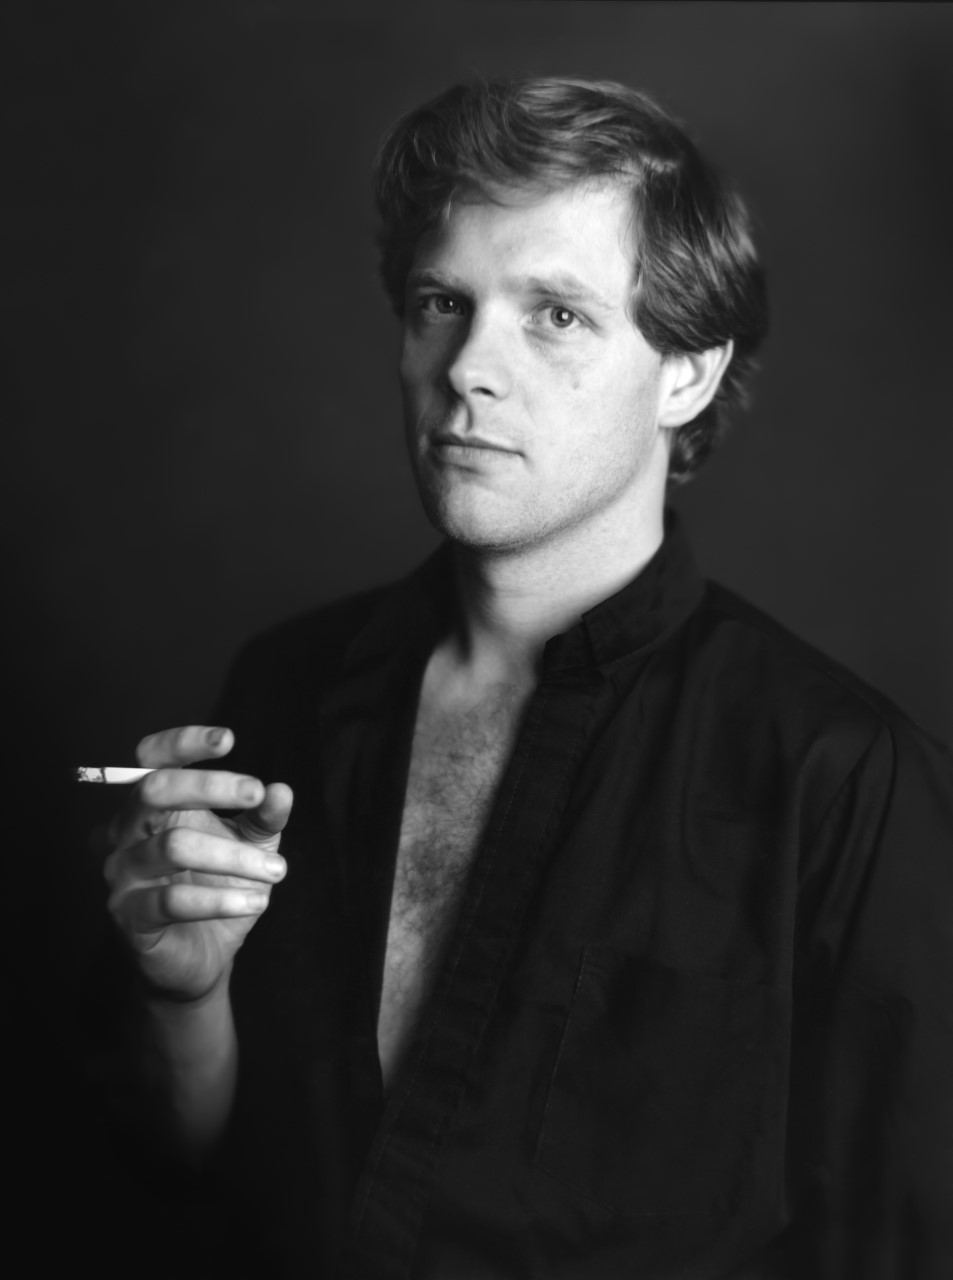 A man wearing a black shirt holding a cigarette